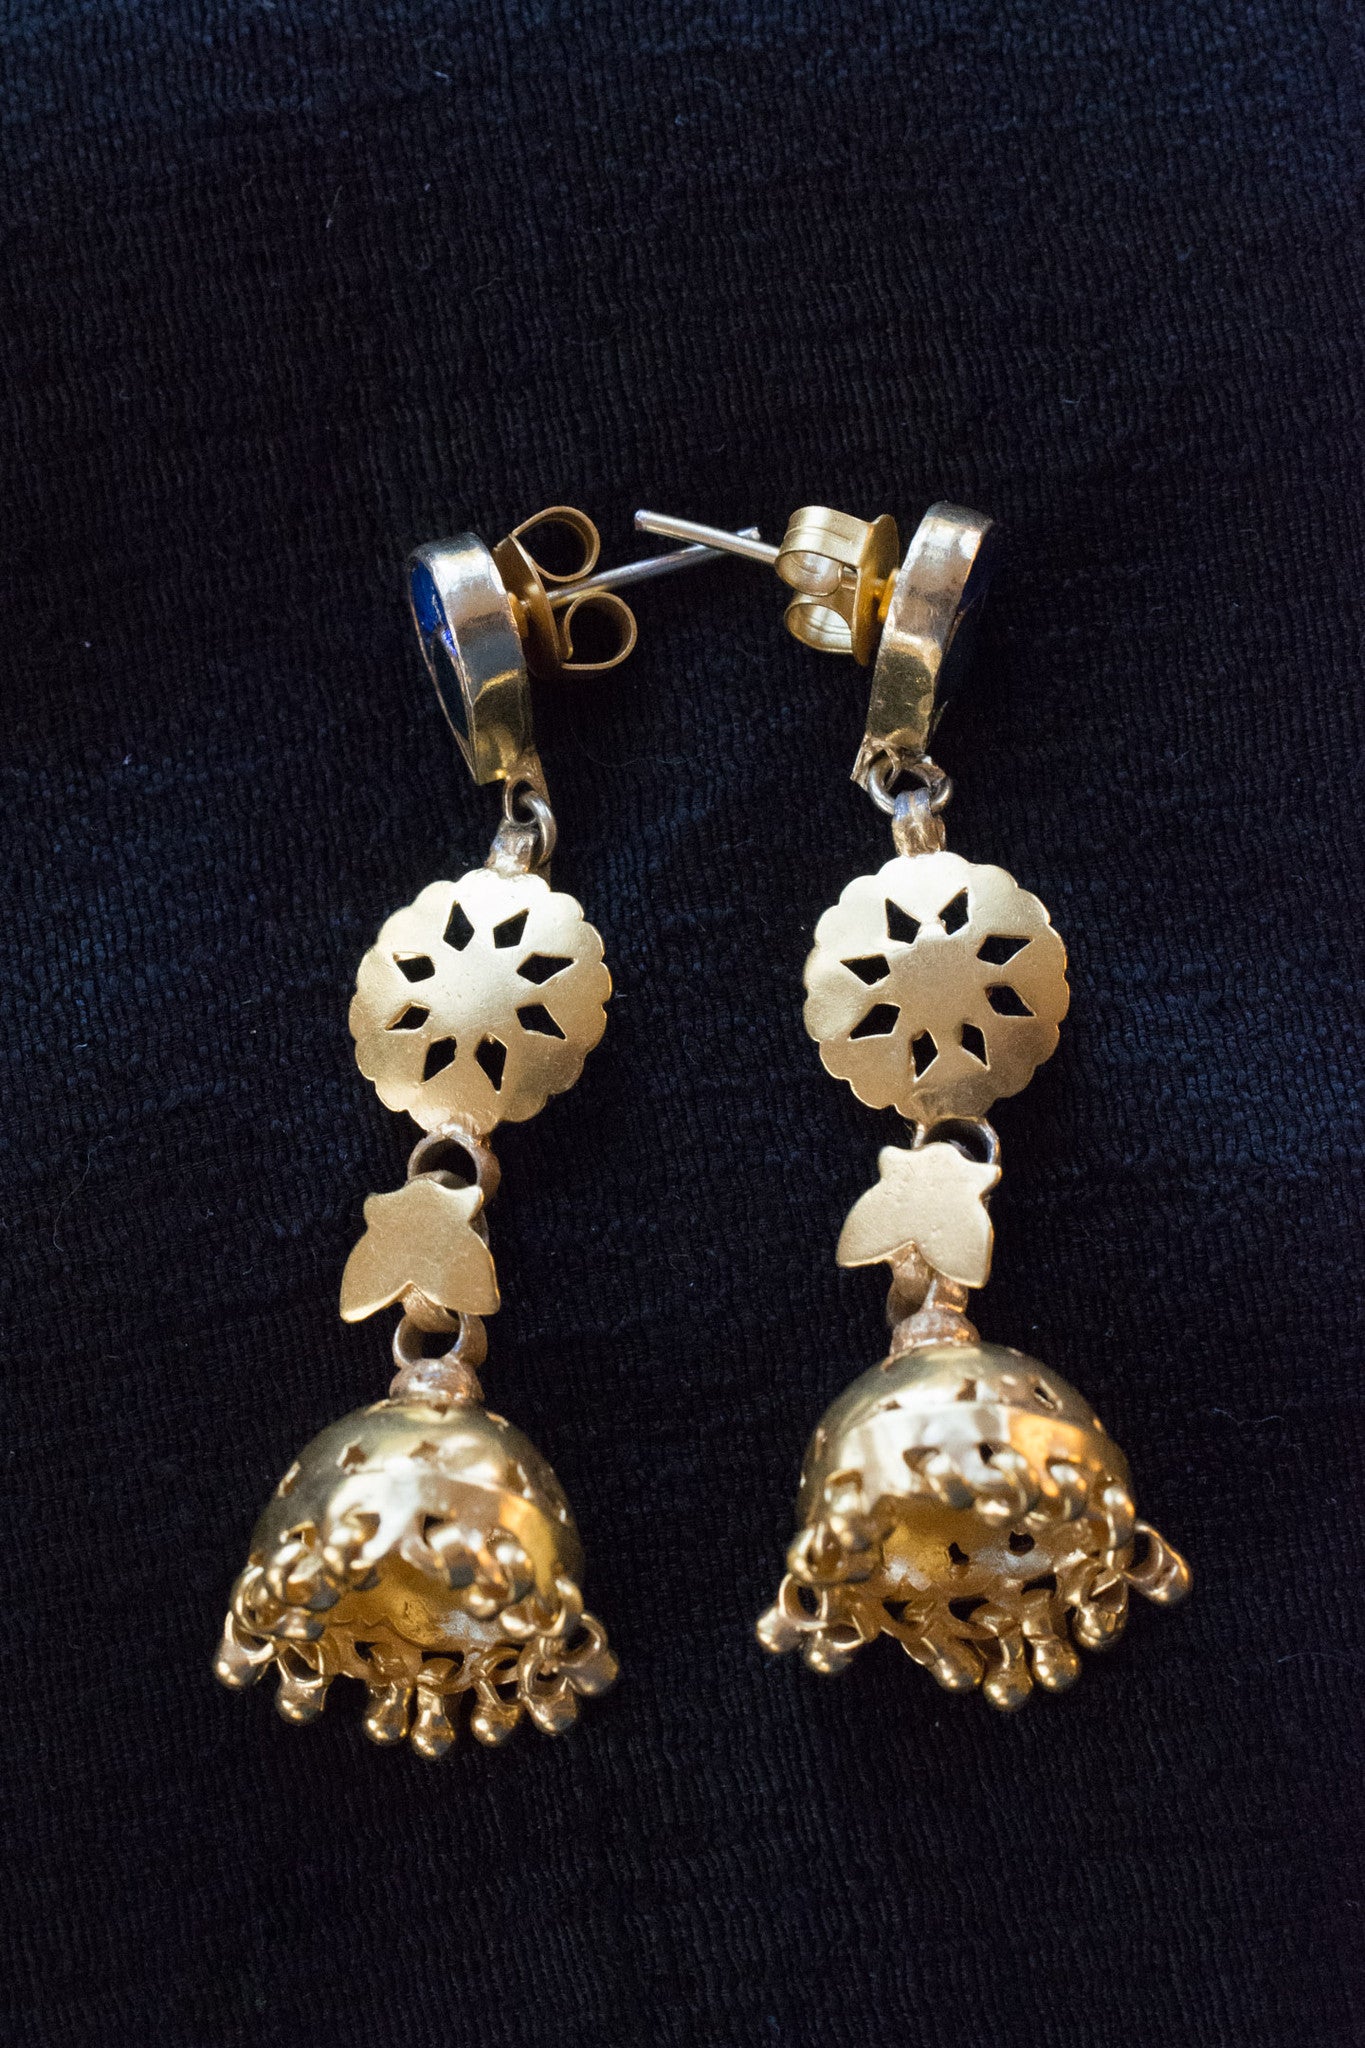 20a462-silver-gold-plated-amrapali-earrings-glass-cut-work-chandelier